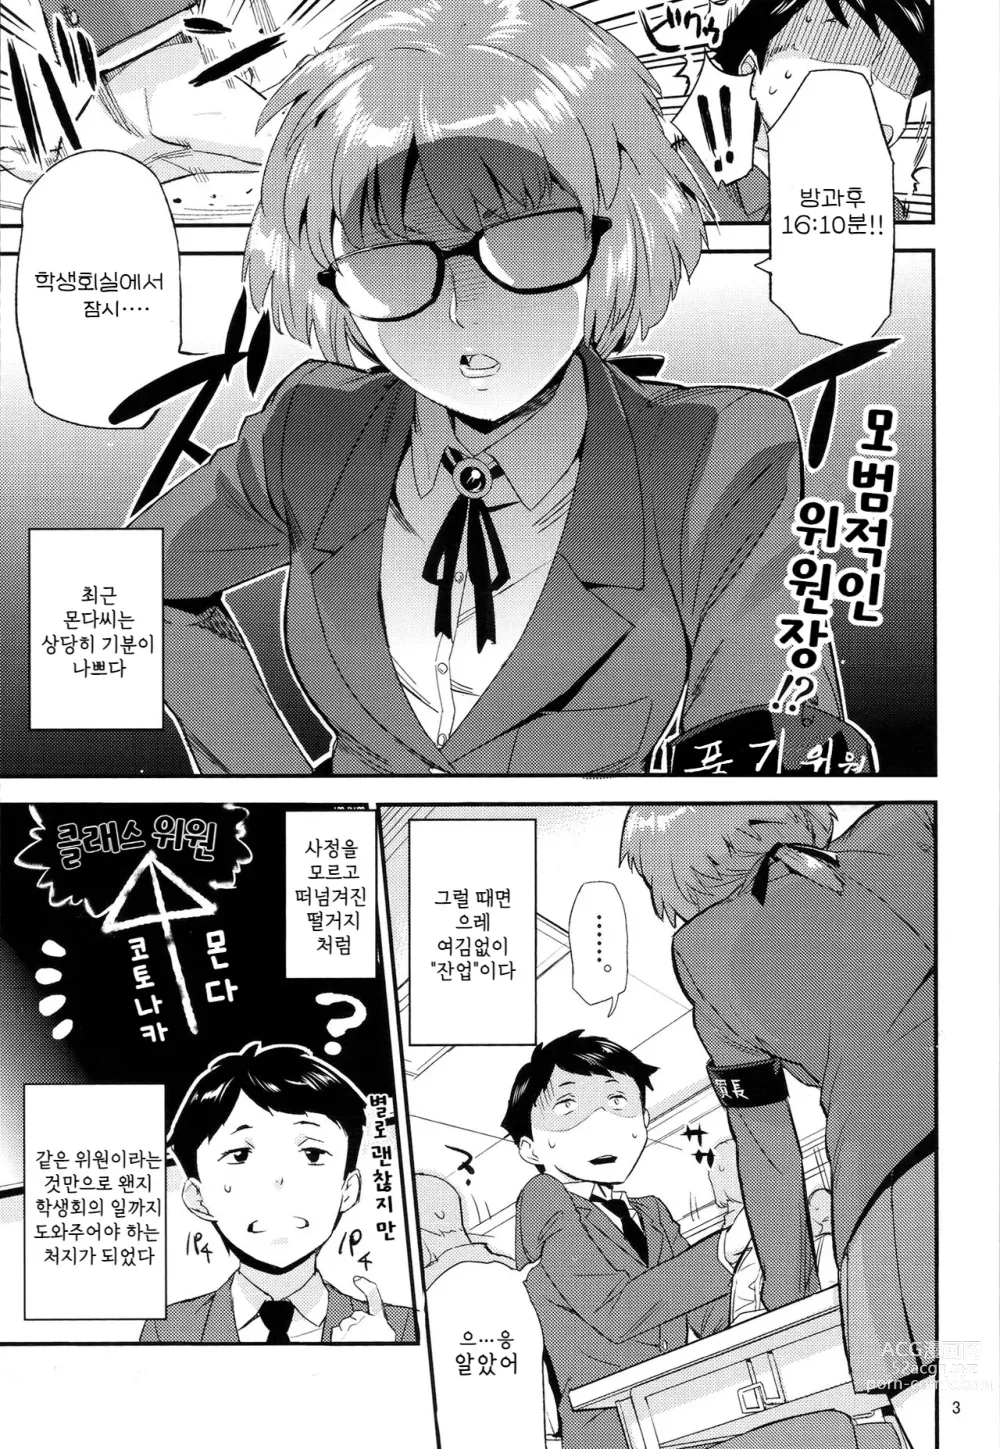 Page 3 of doujinshi 모범적인 위원장!?